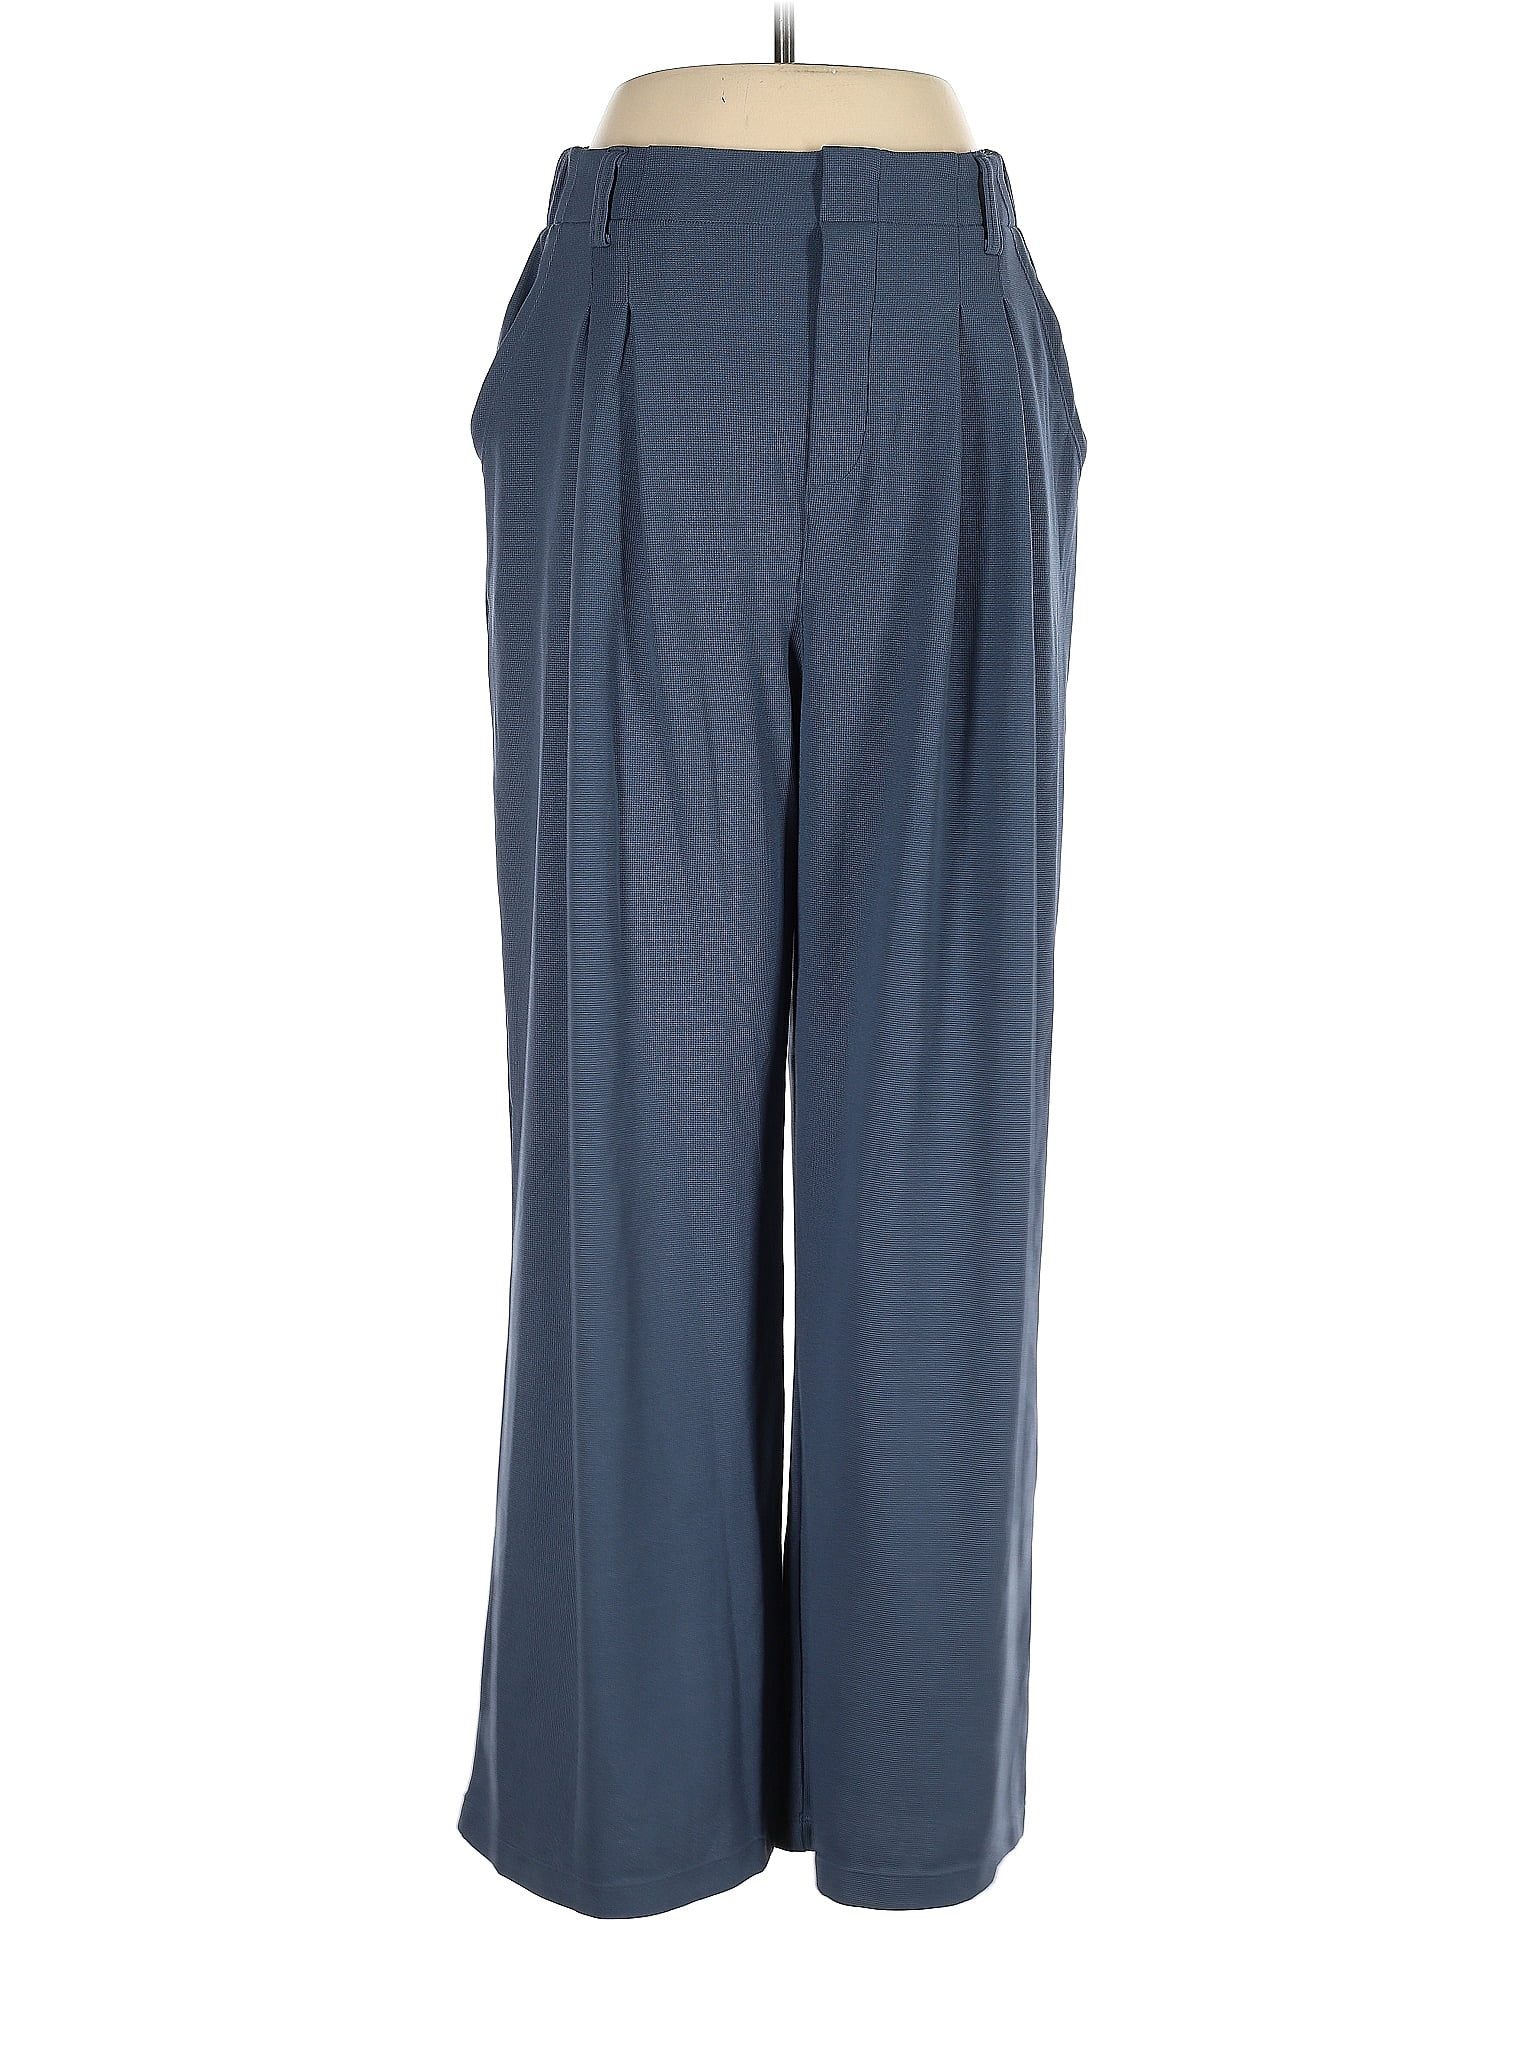 Halara Blue Casual Pants Size M (Petite) - 57% off